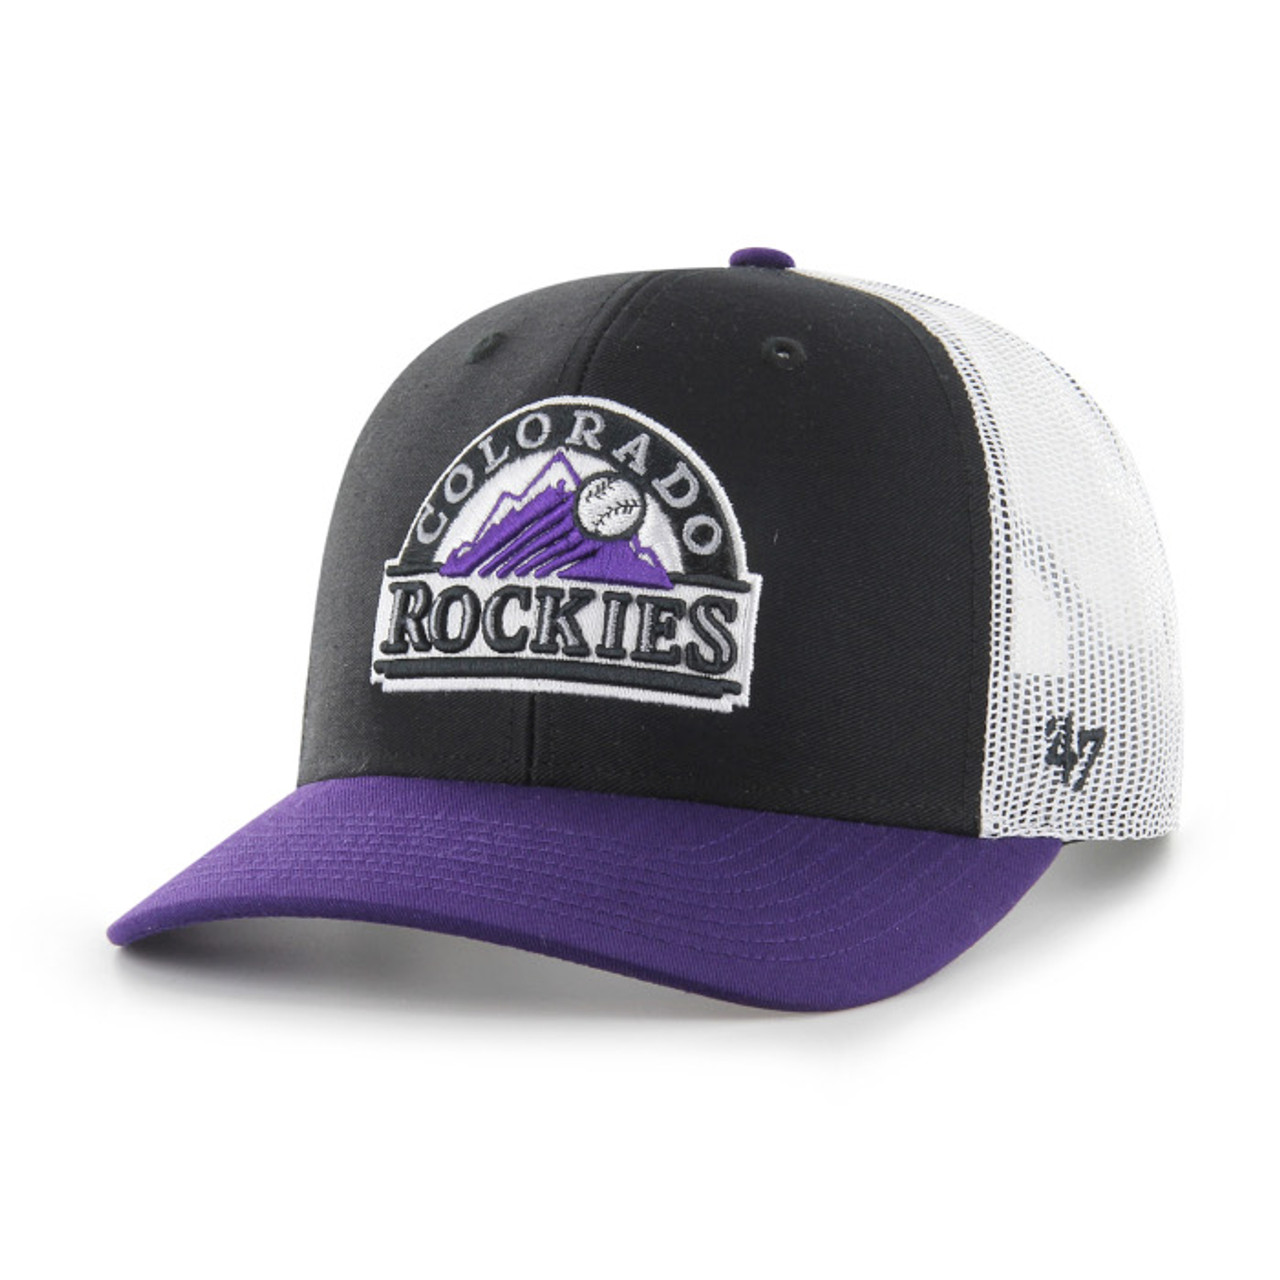 Vintage MLB Rockies Youth Baseball 5 Shirt 50/50 White Purple 